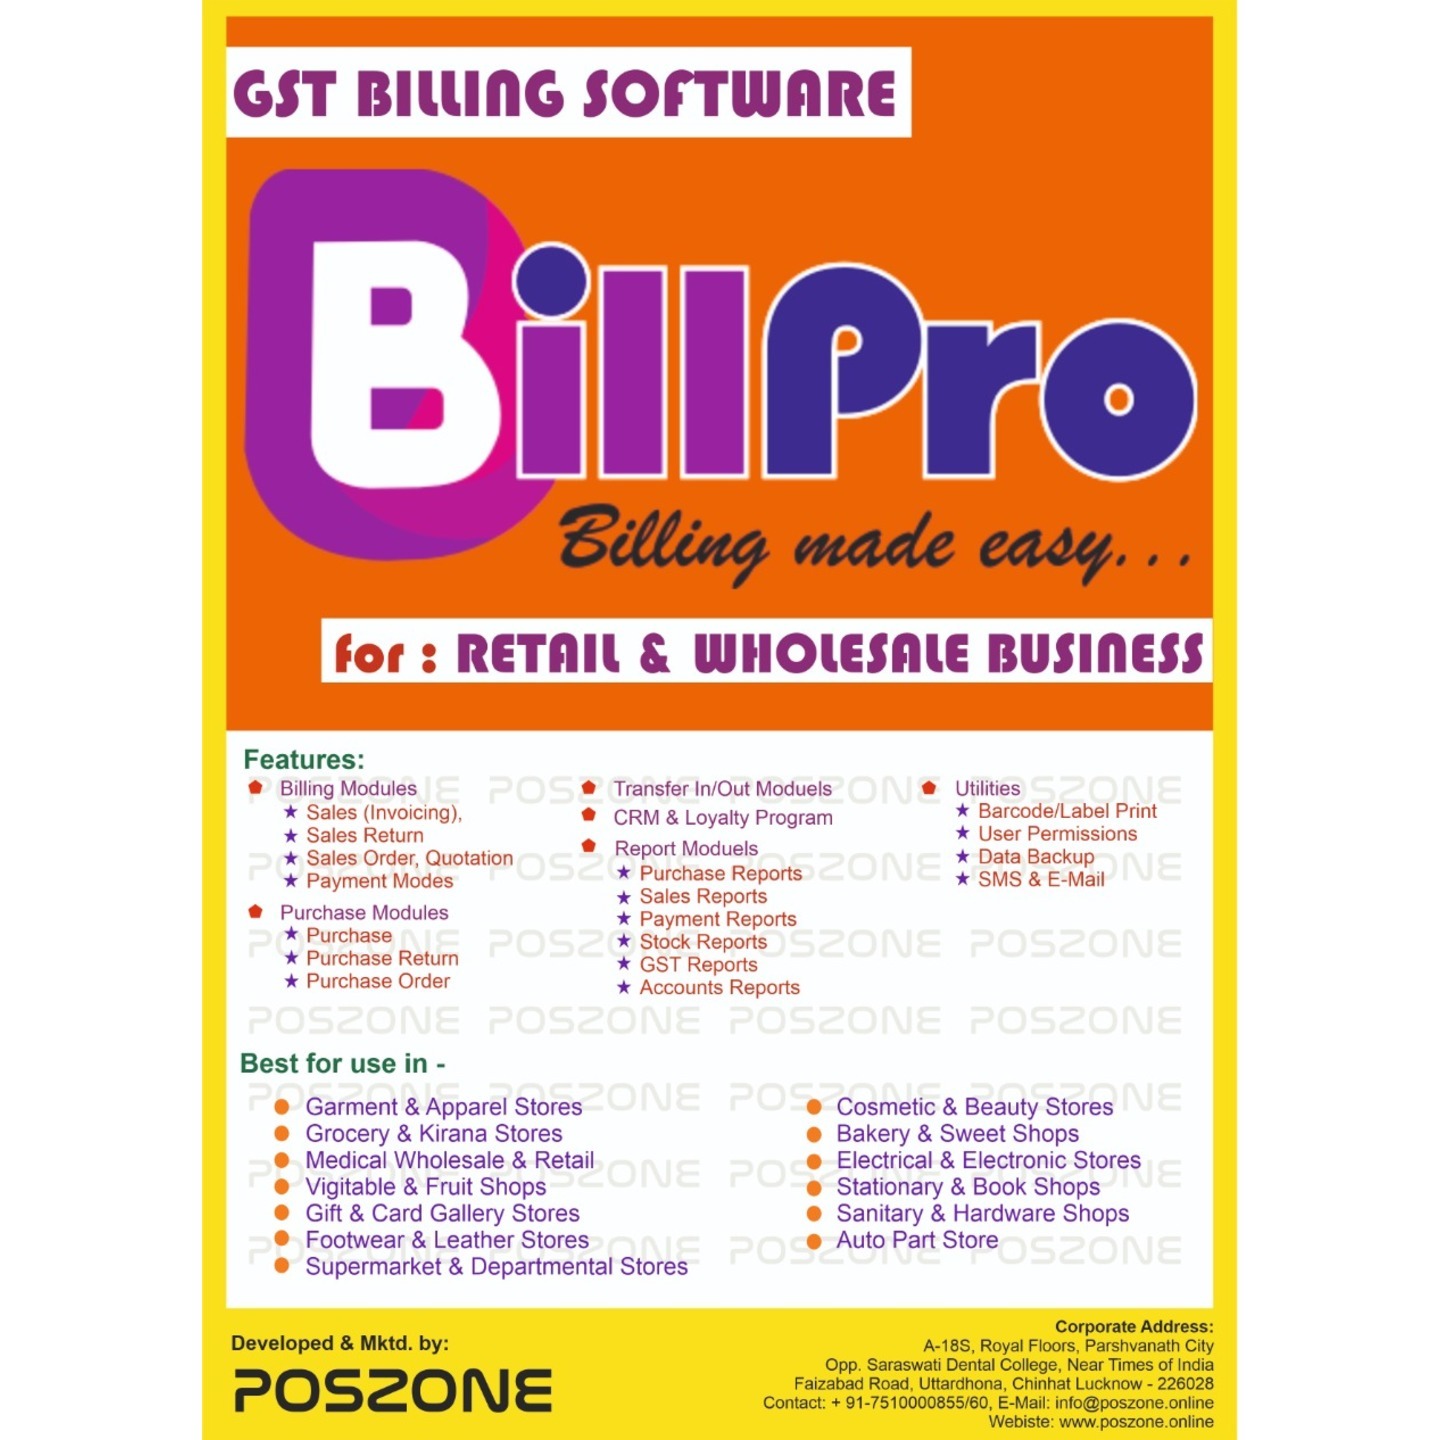 BillPro - GST Billing Software